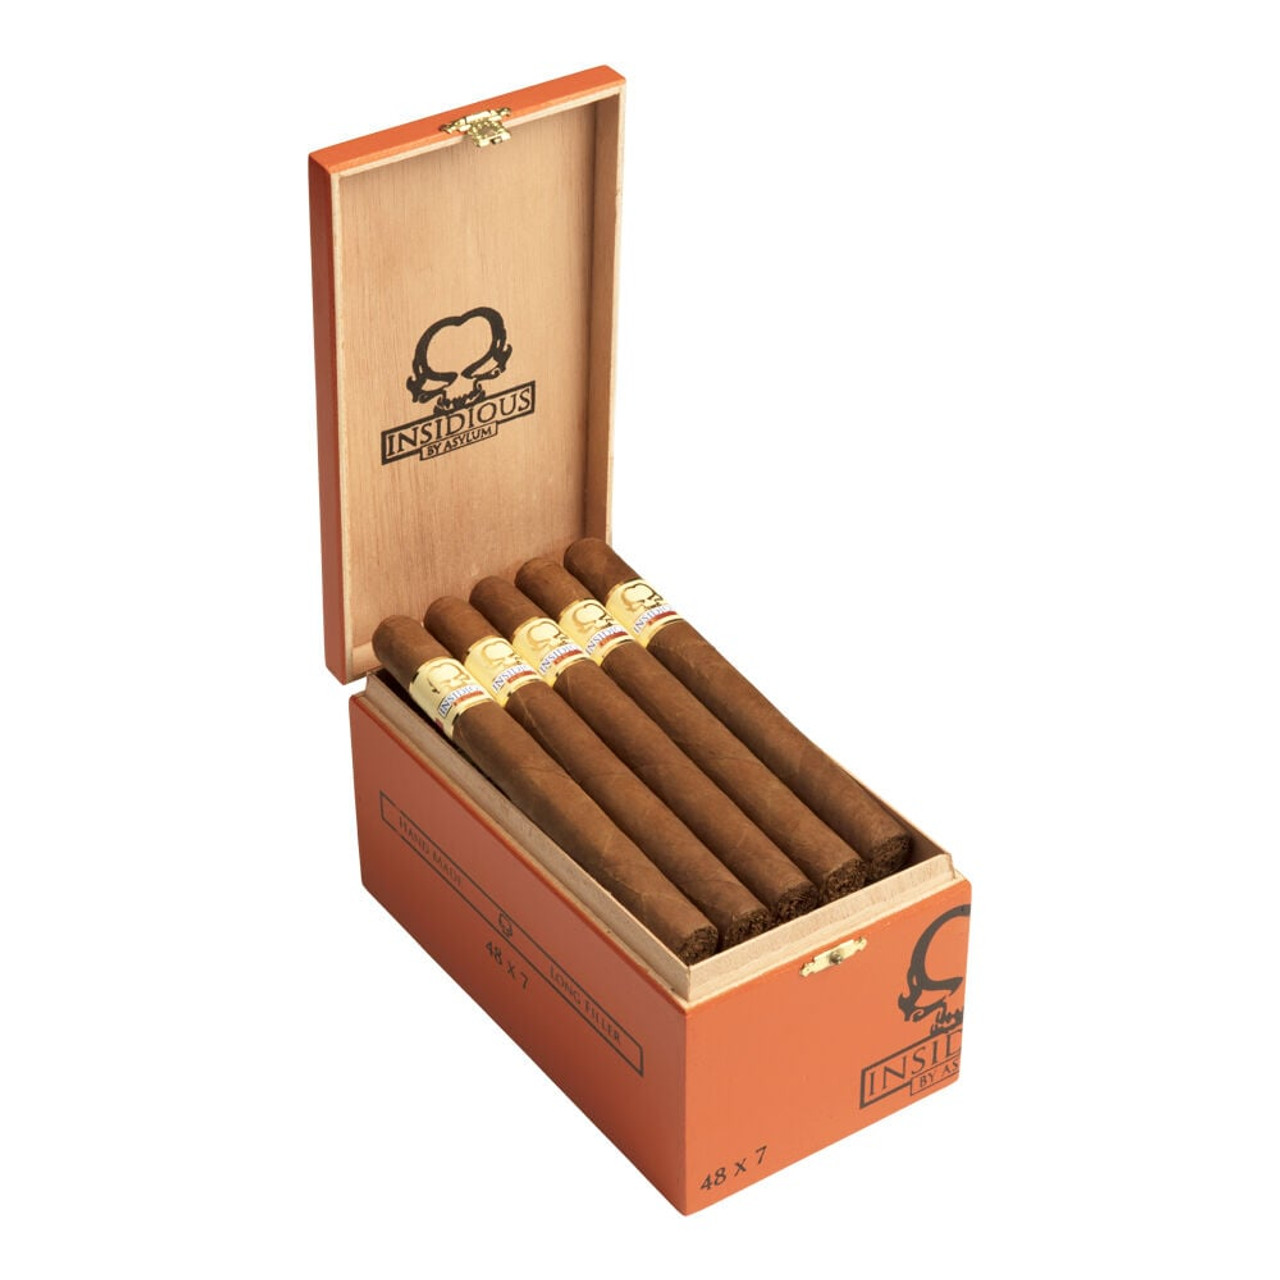 Insidious by Asylum 50 X 5 Cigars - 5 x 50 (Box of 25) Open